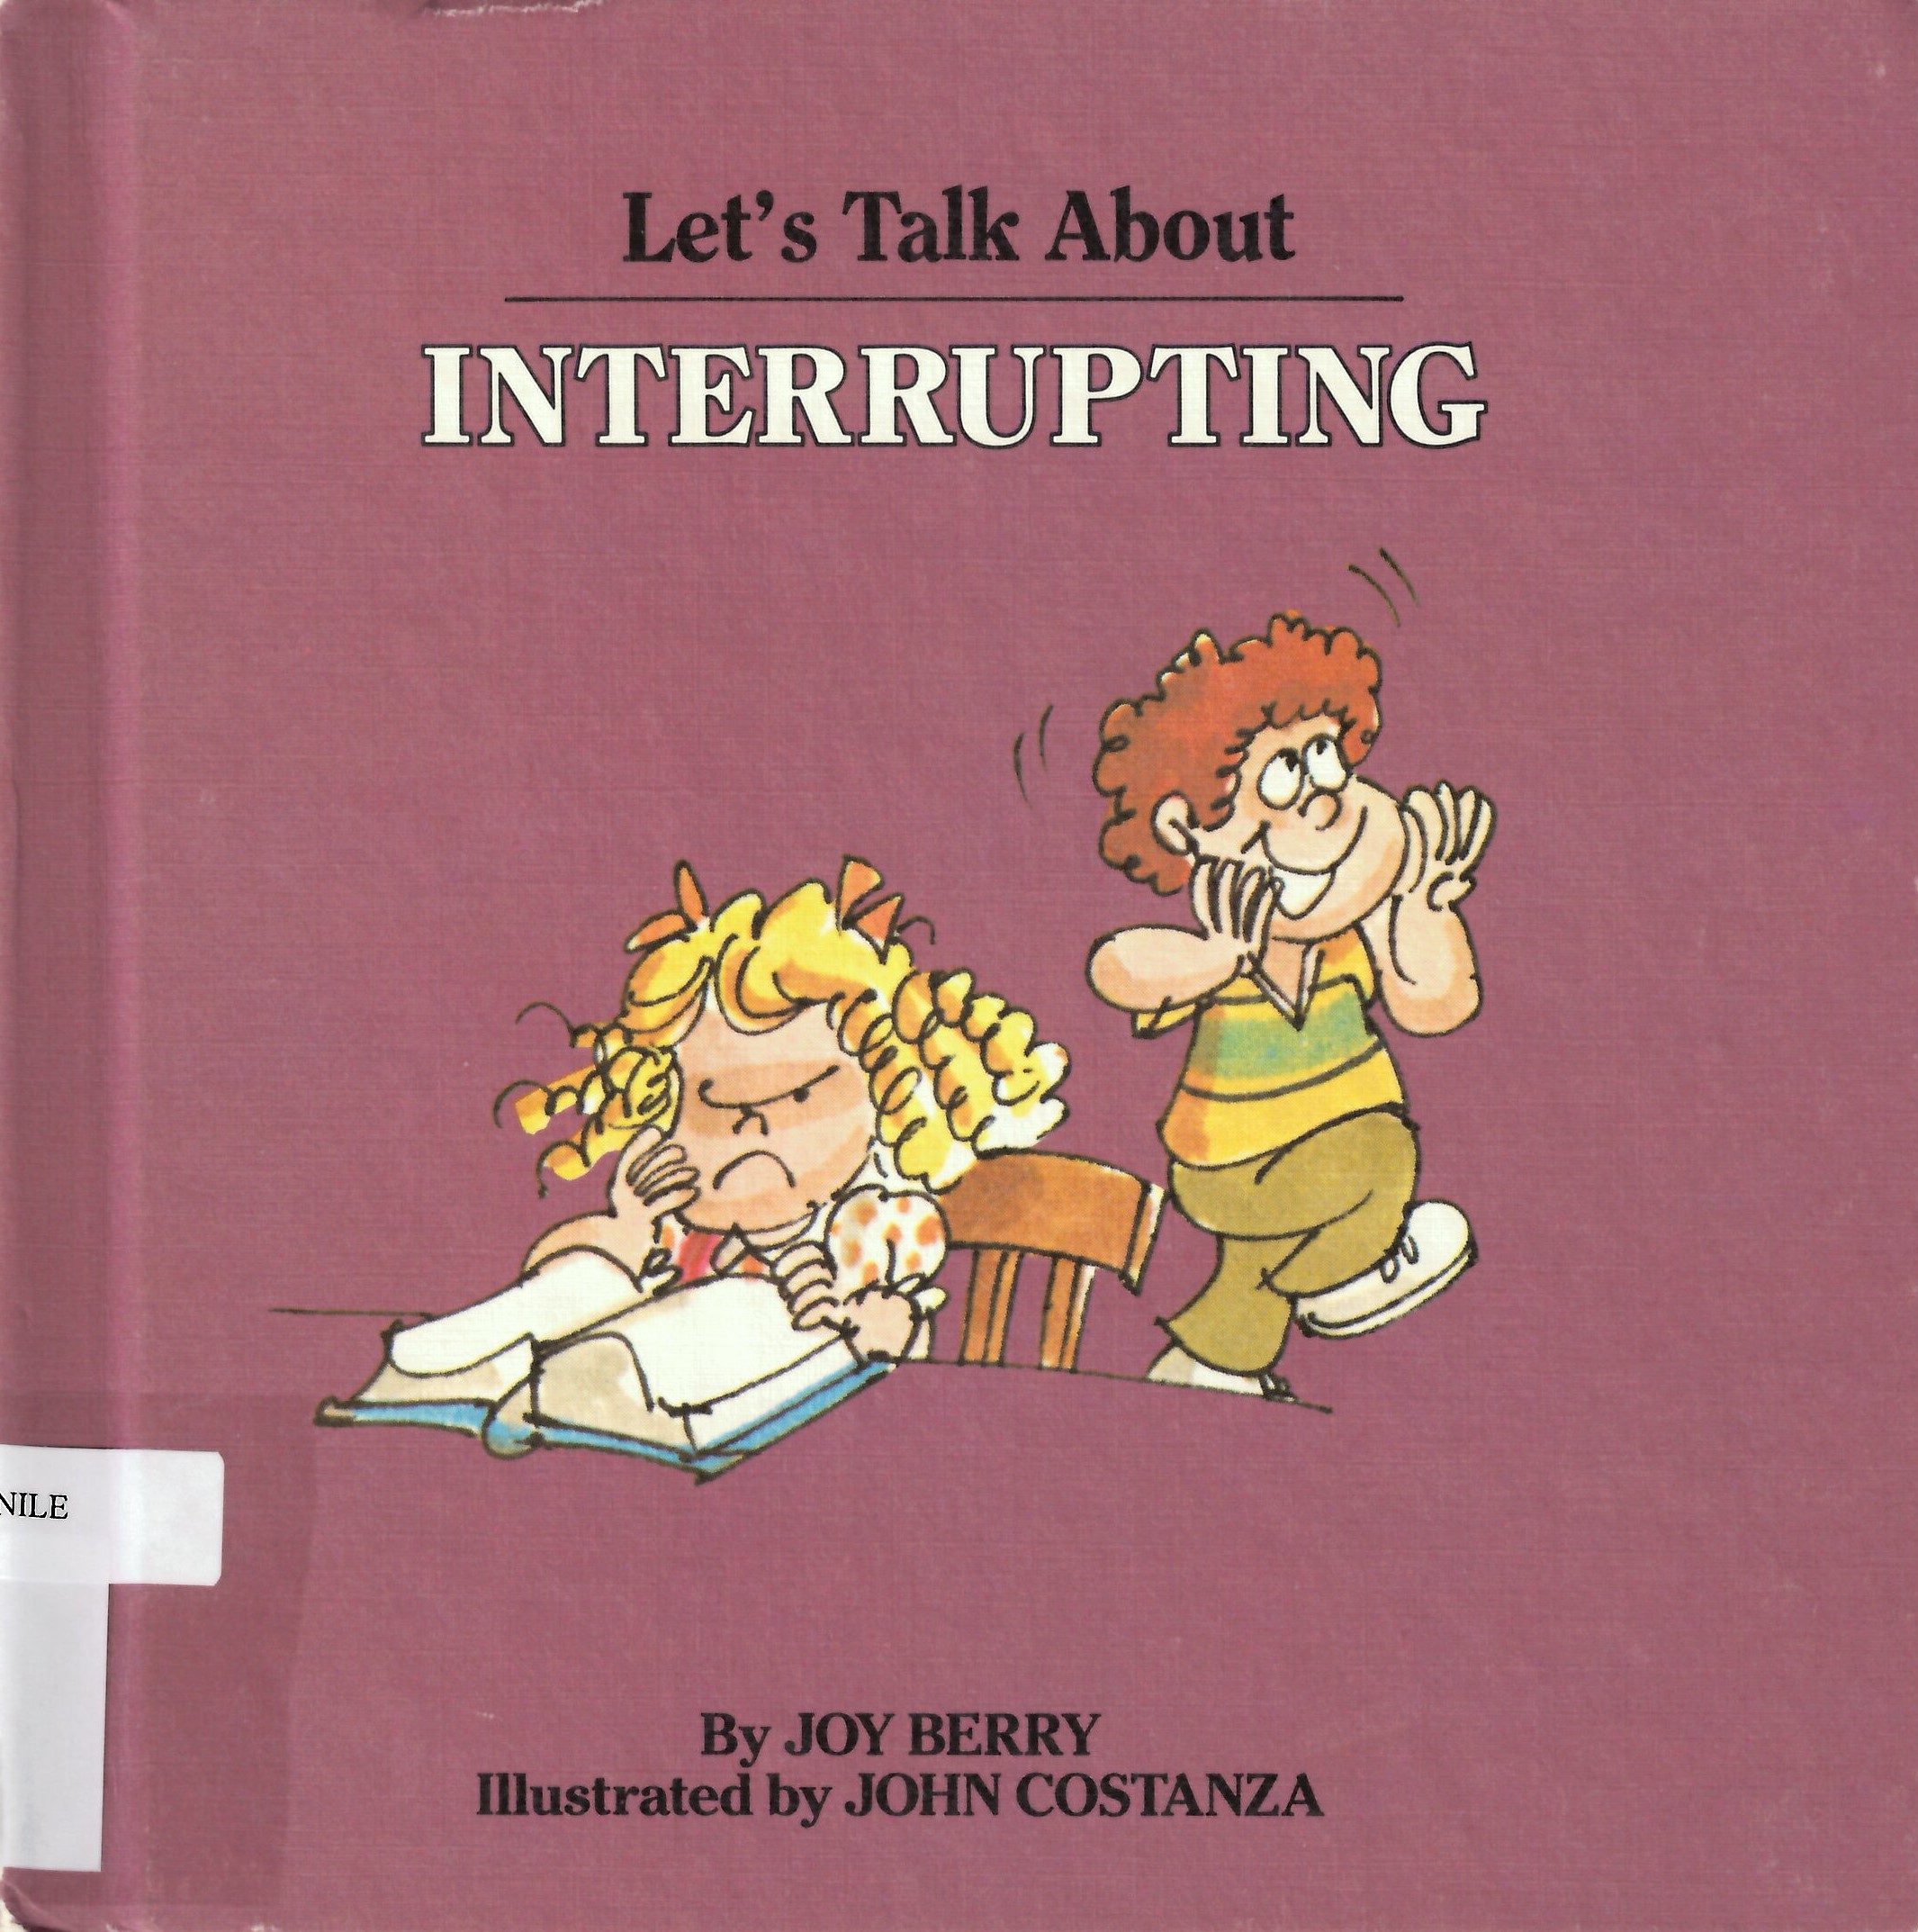 Let's talk about interrupting